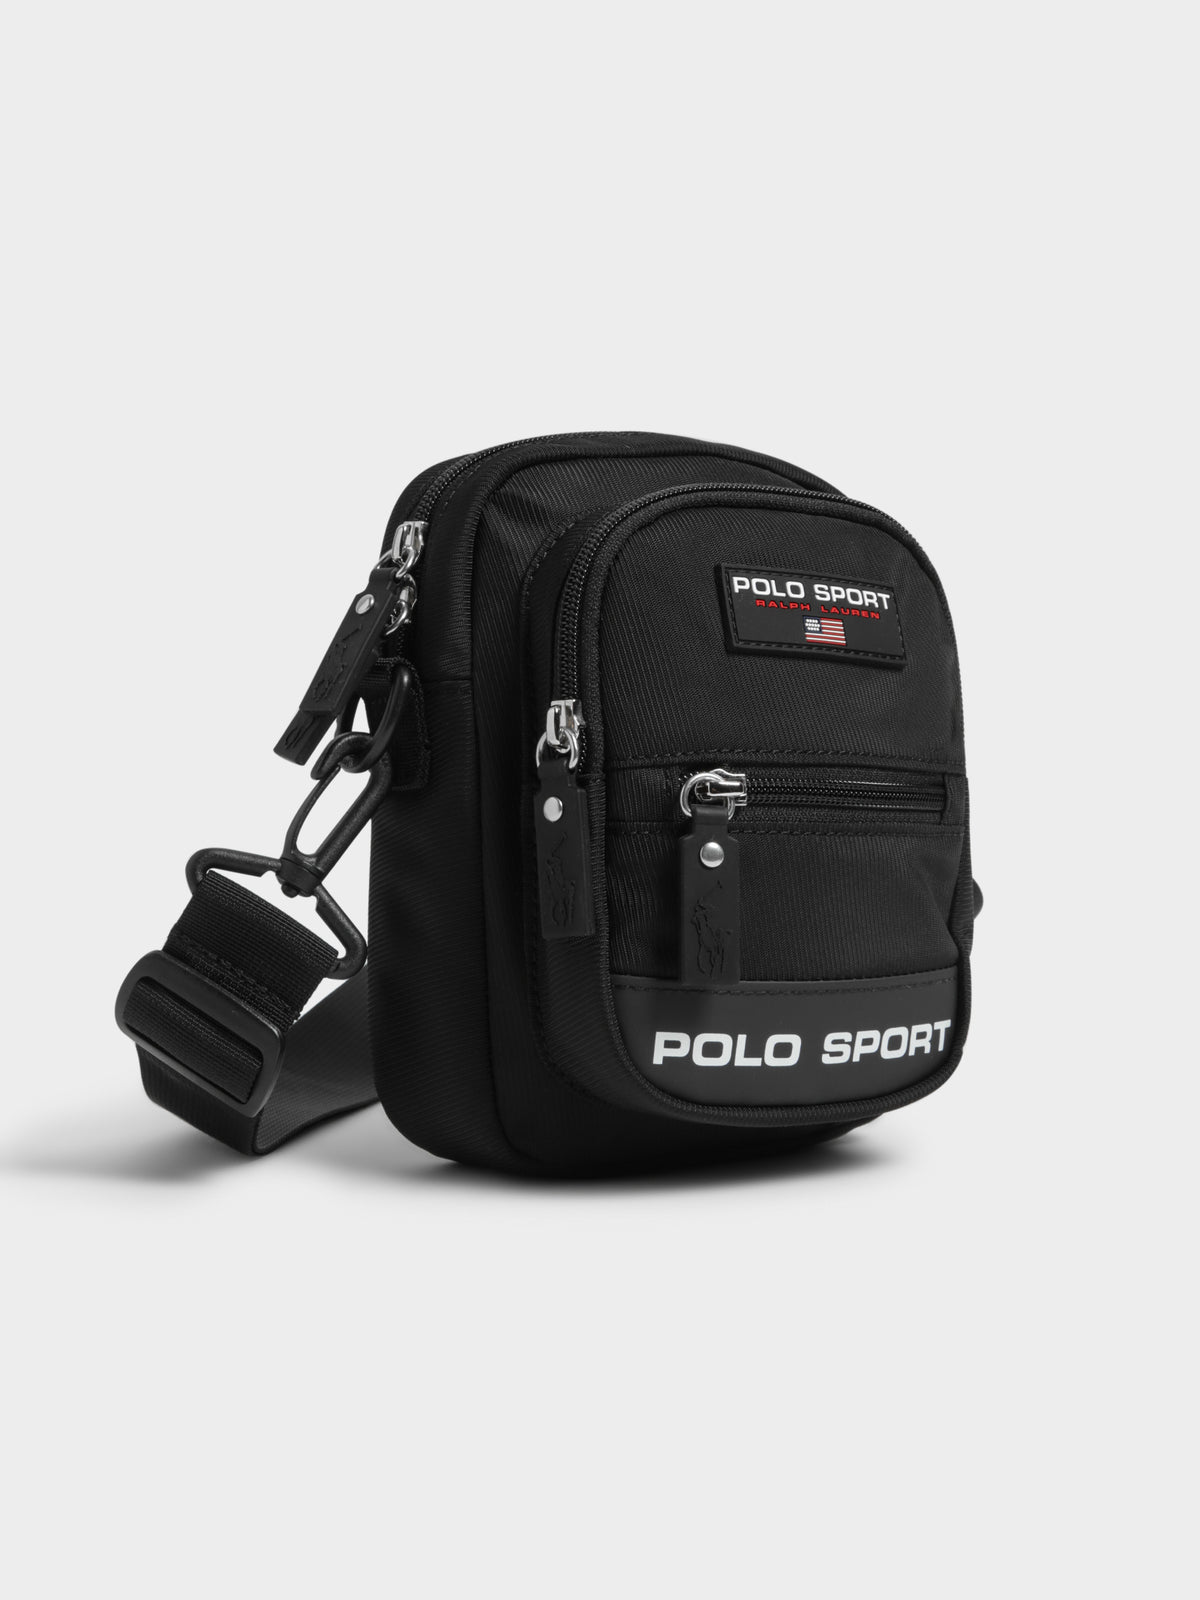 Polo Sport Cross Body Bag in Black